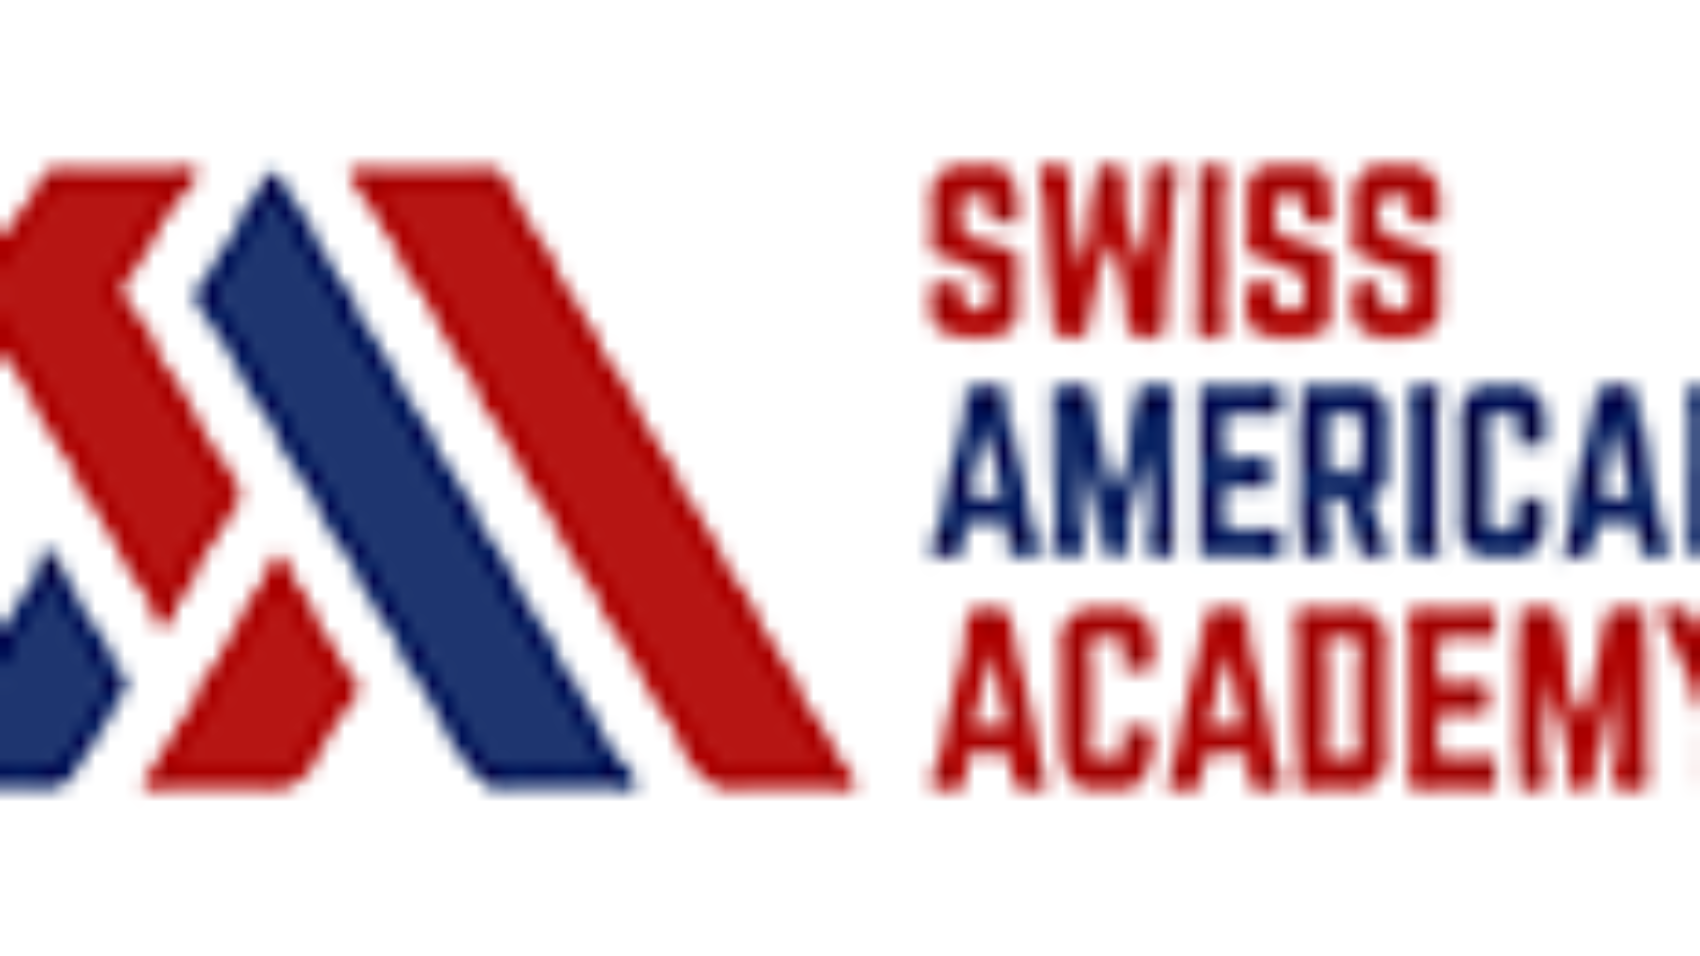 Swiss-American-Academy